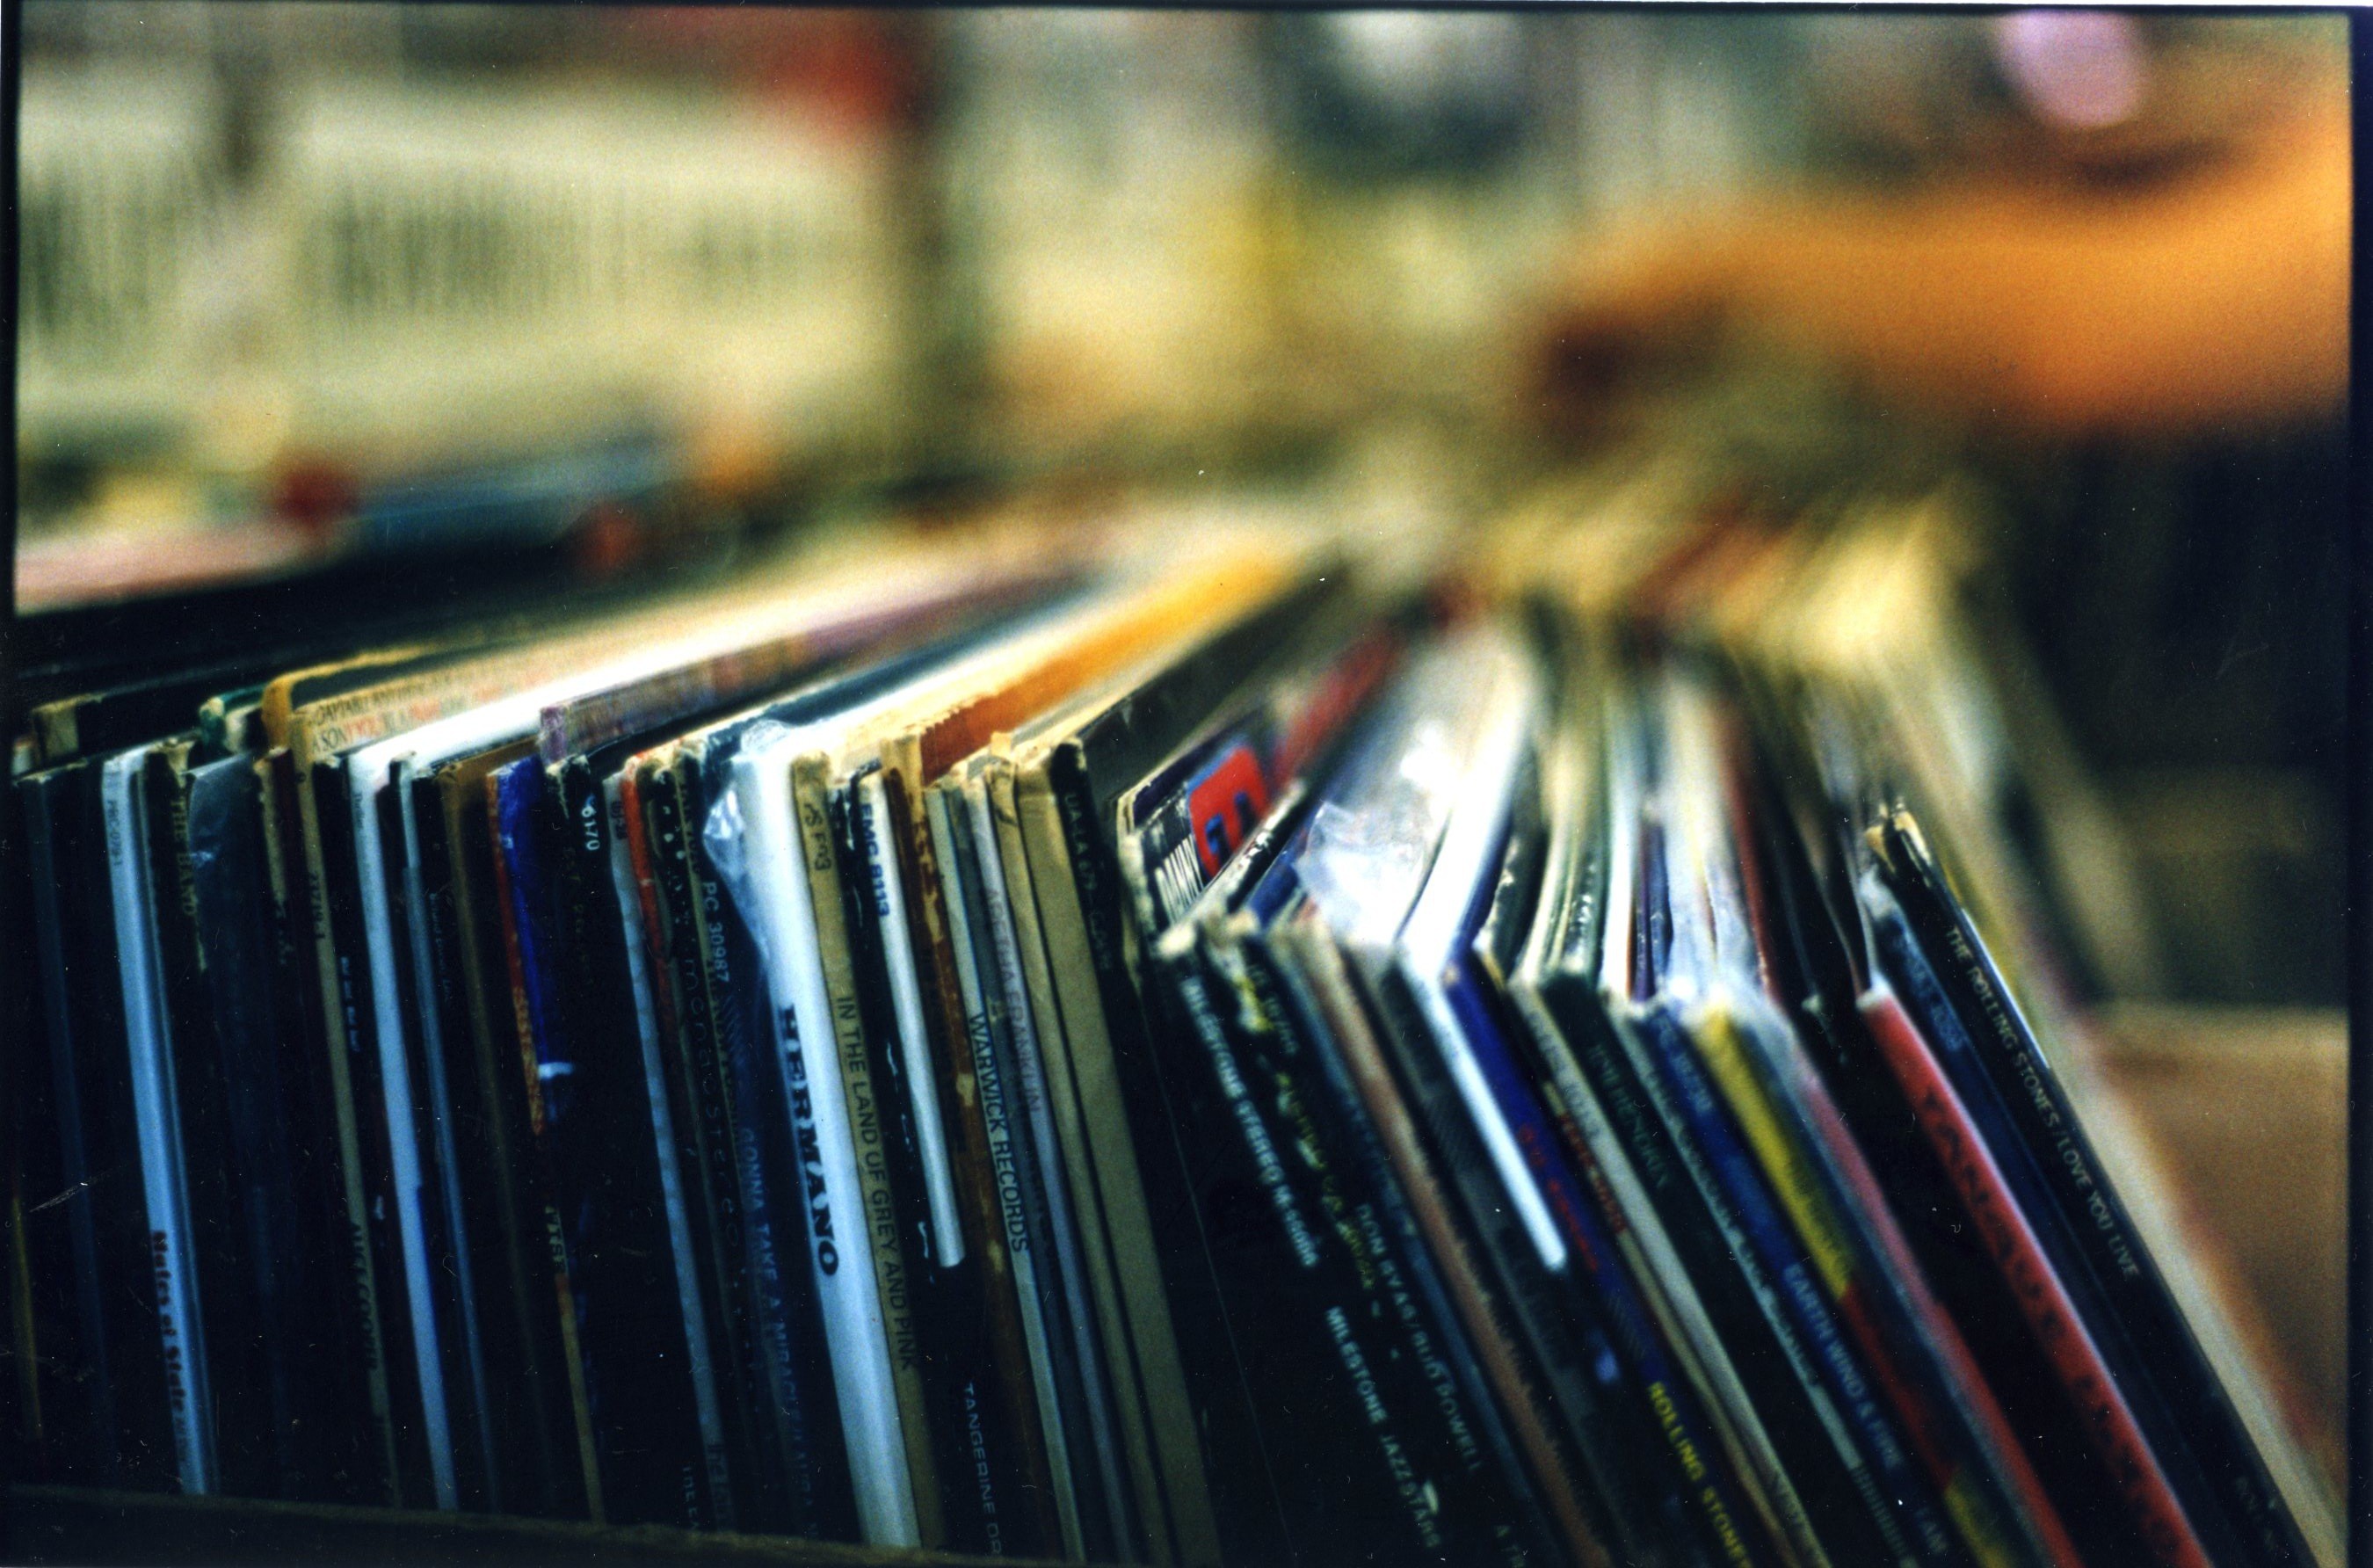 General 2700x1784 blurred stores albums vinyl music